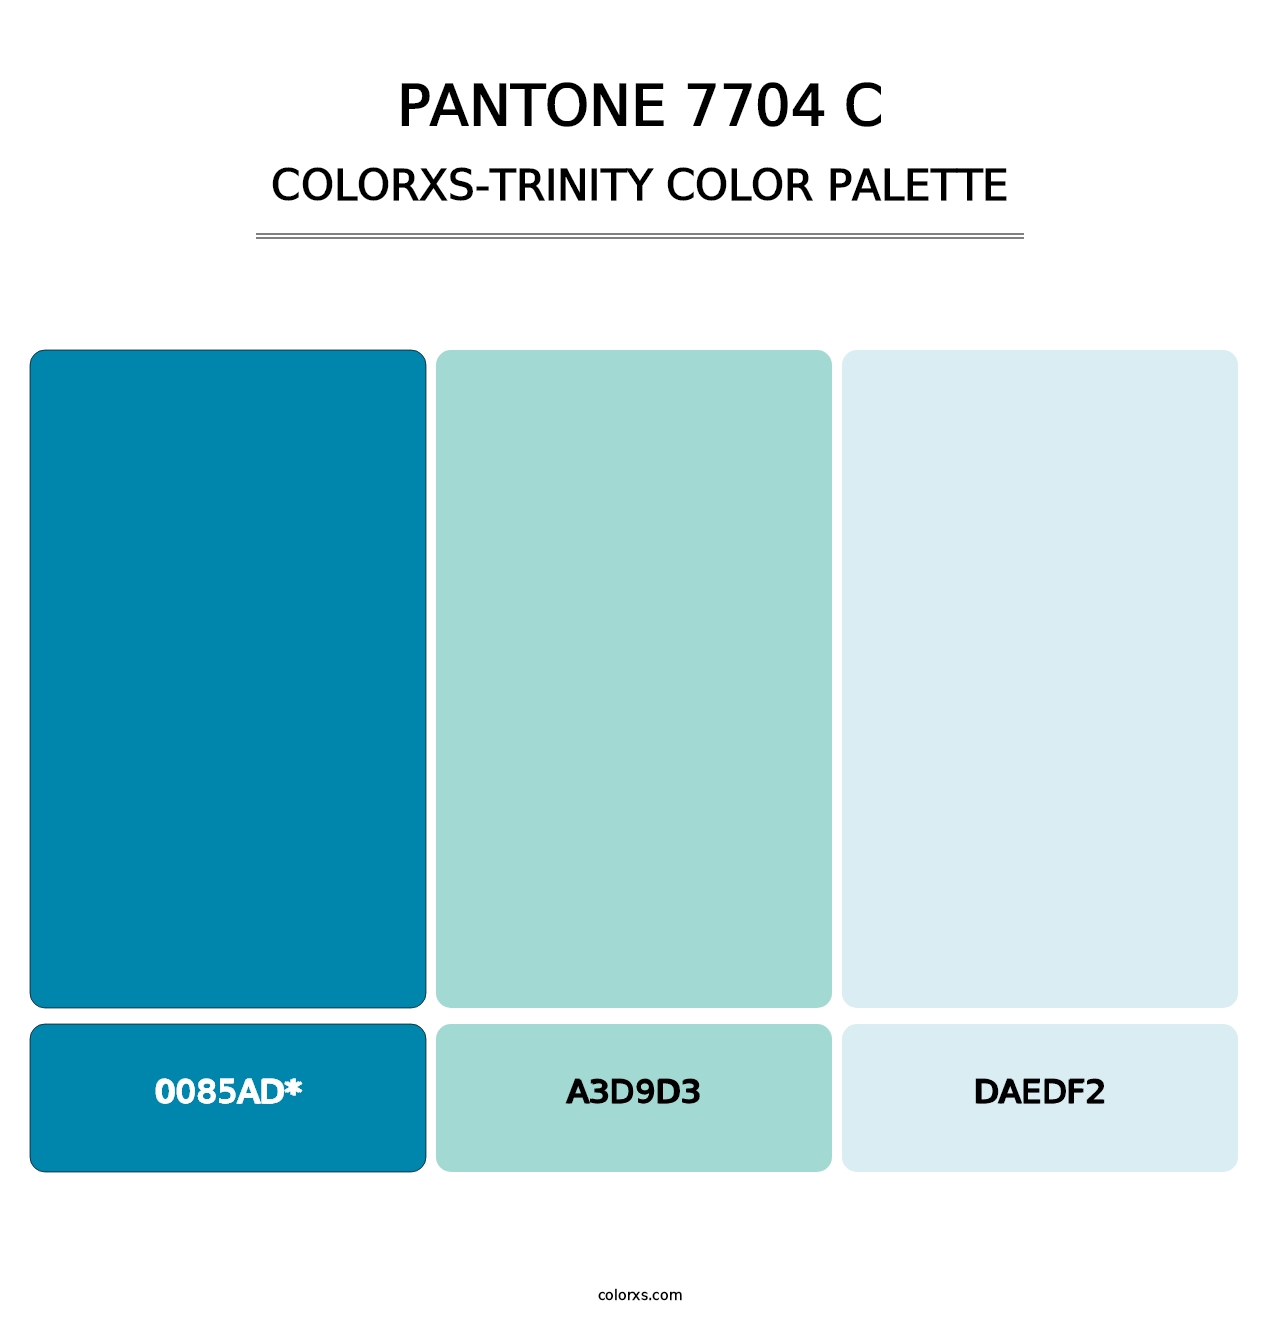 PANTONE 7704 C - Colorxs Trinity Palette